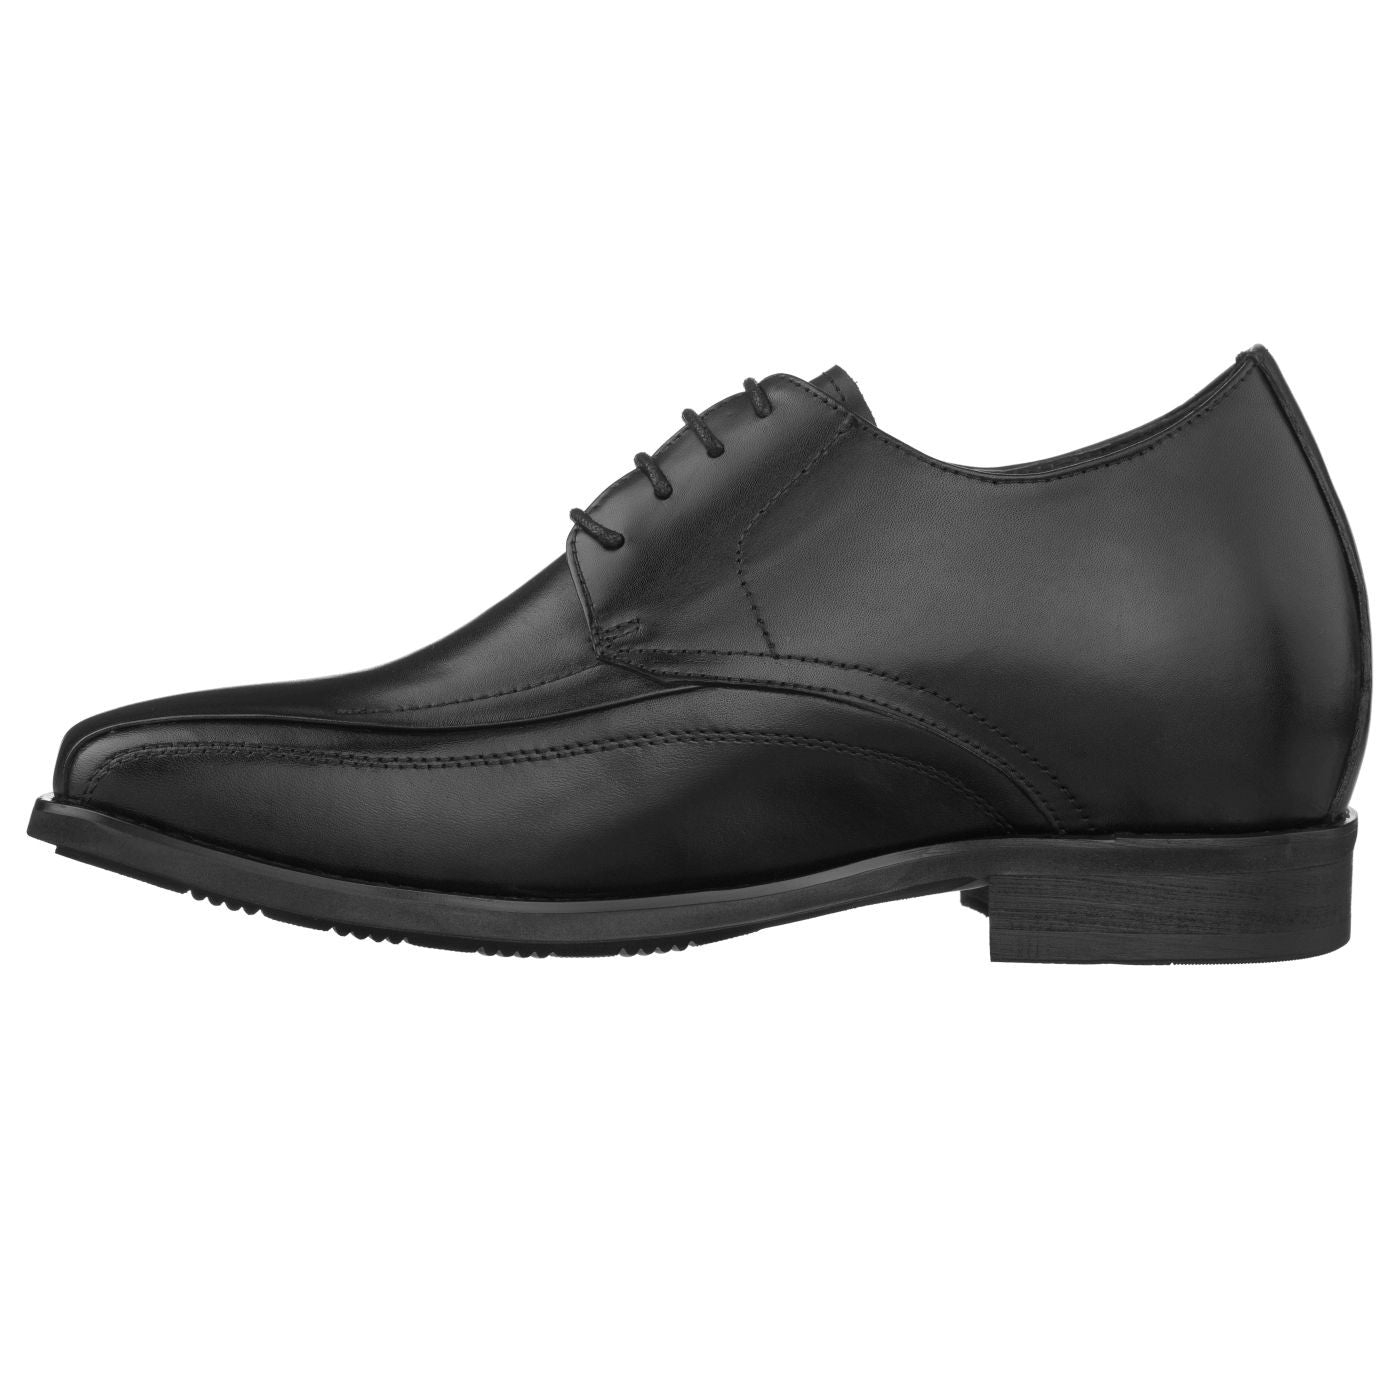 Elevator shoes height increase CALDEN - K333021 - 3 Inches Taller (Black) - Super Lightweight